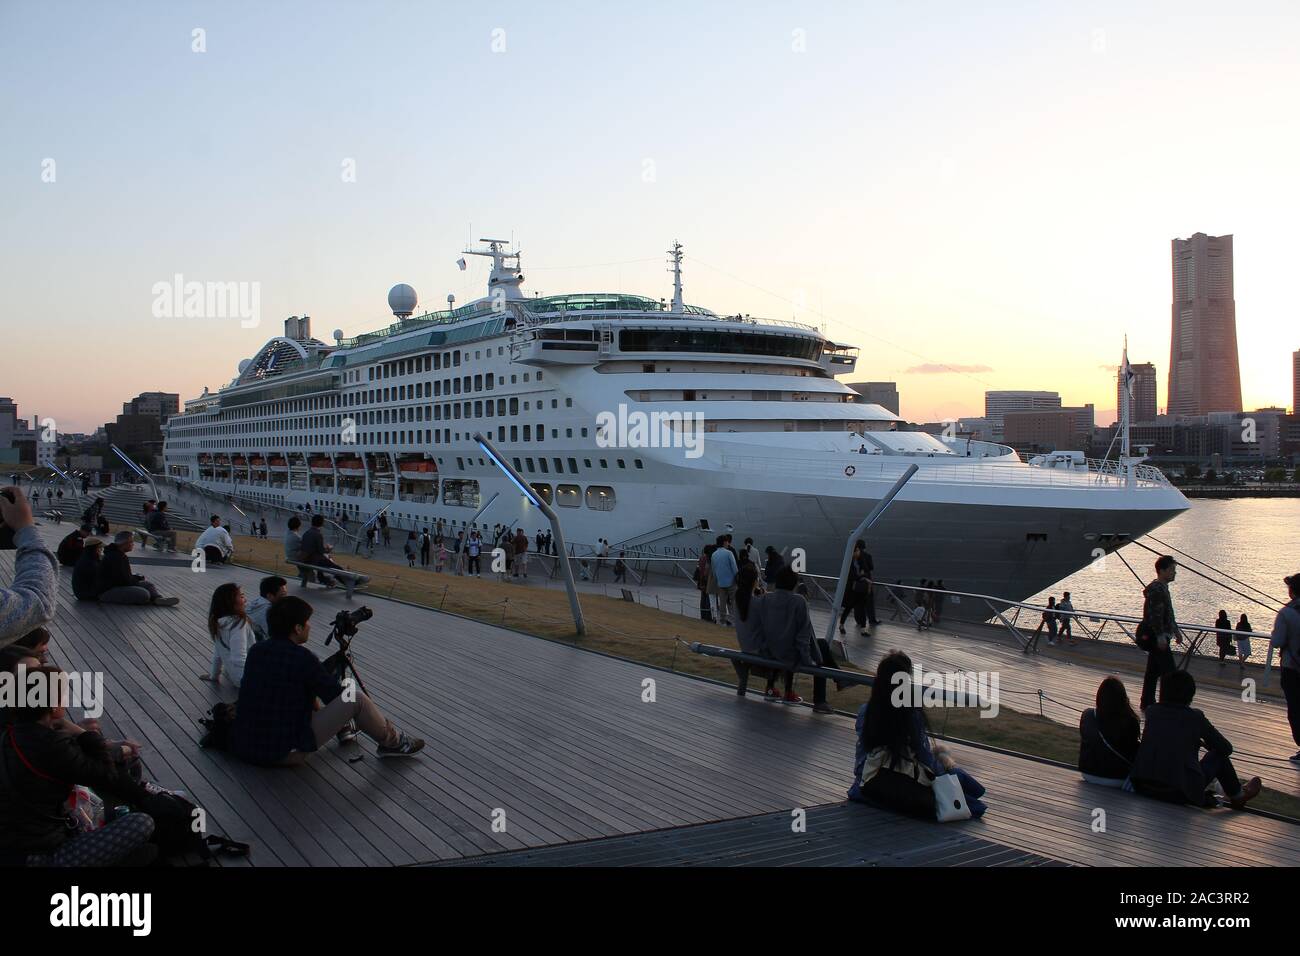 YOKOHAMA, JAPAN - APRIL 15, 2017: Cruise ship Dawn Princess docked at the Osanbashi Pier in Yokohama, Japan. Stock Photo